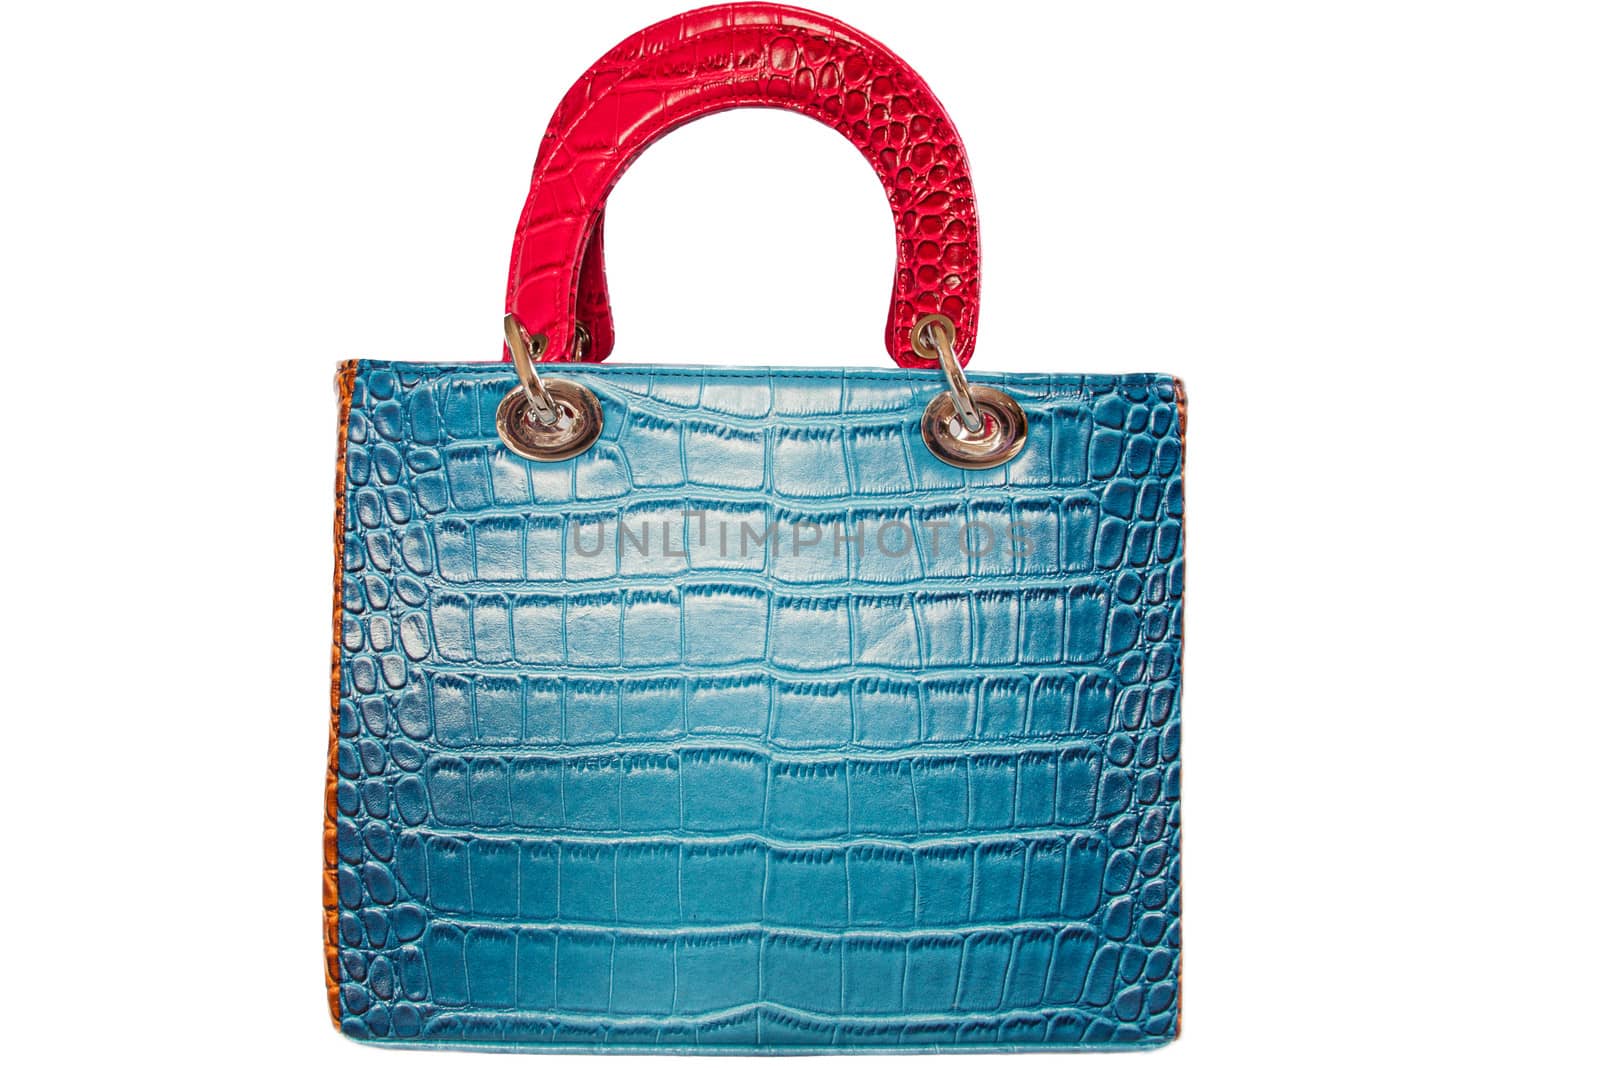 Square female handbag by GryT